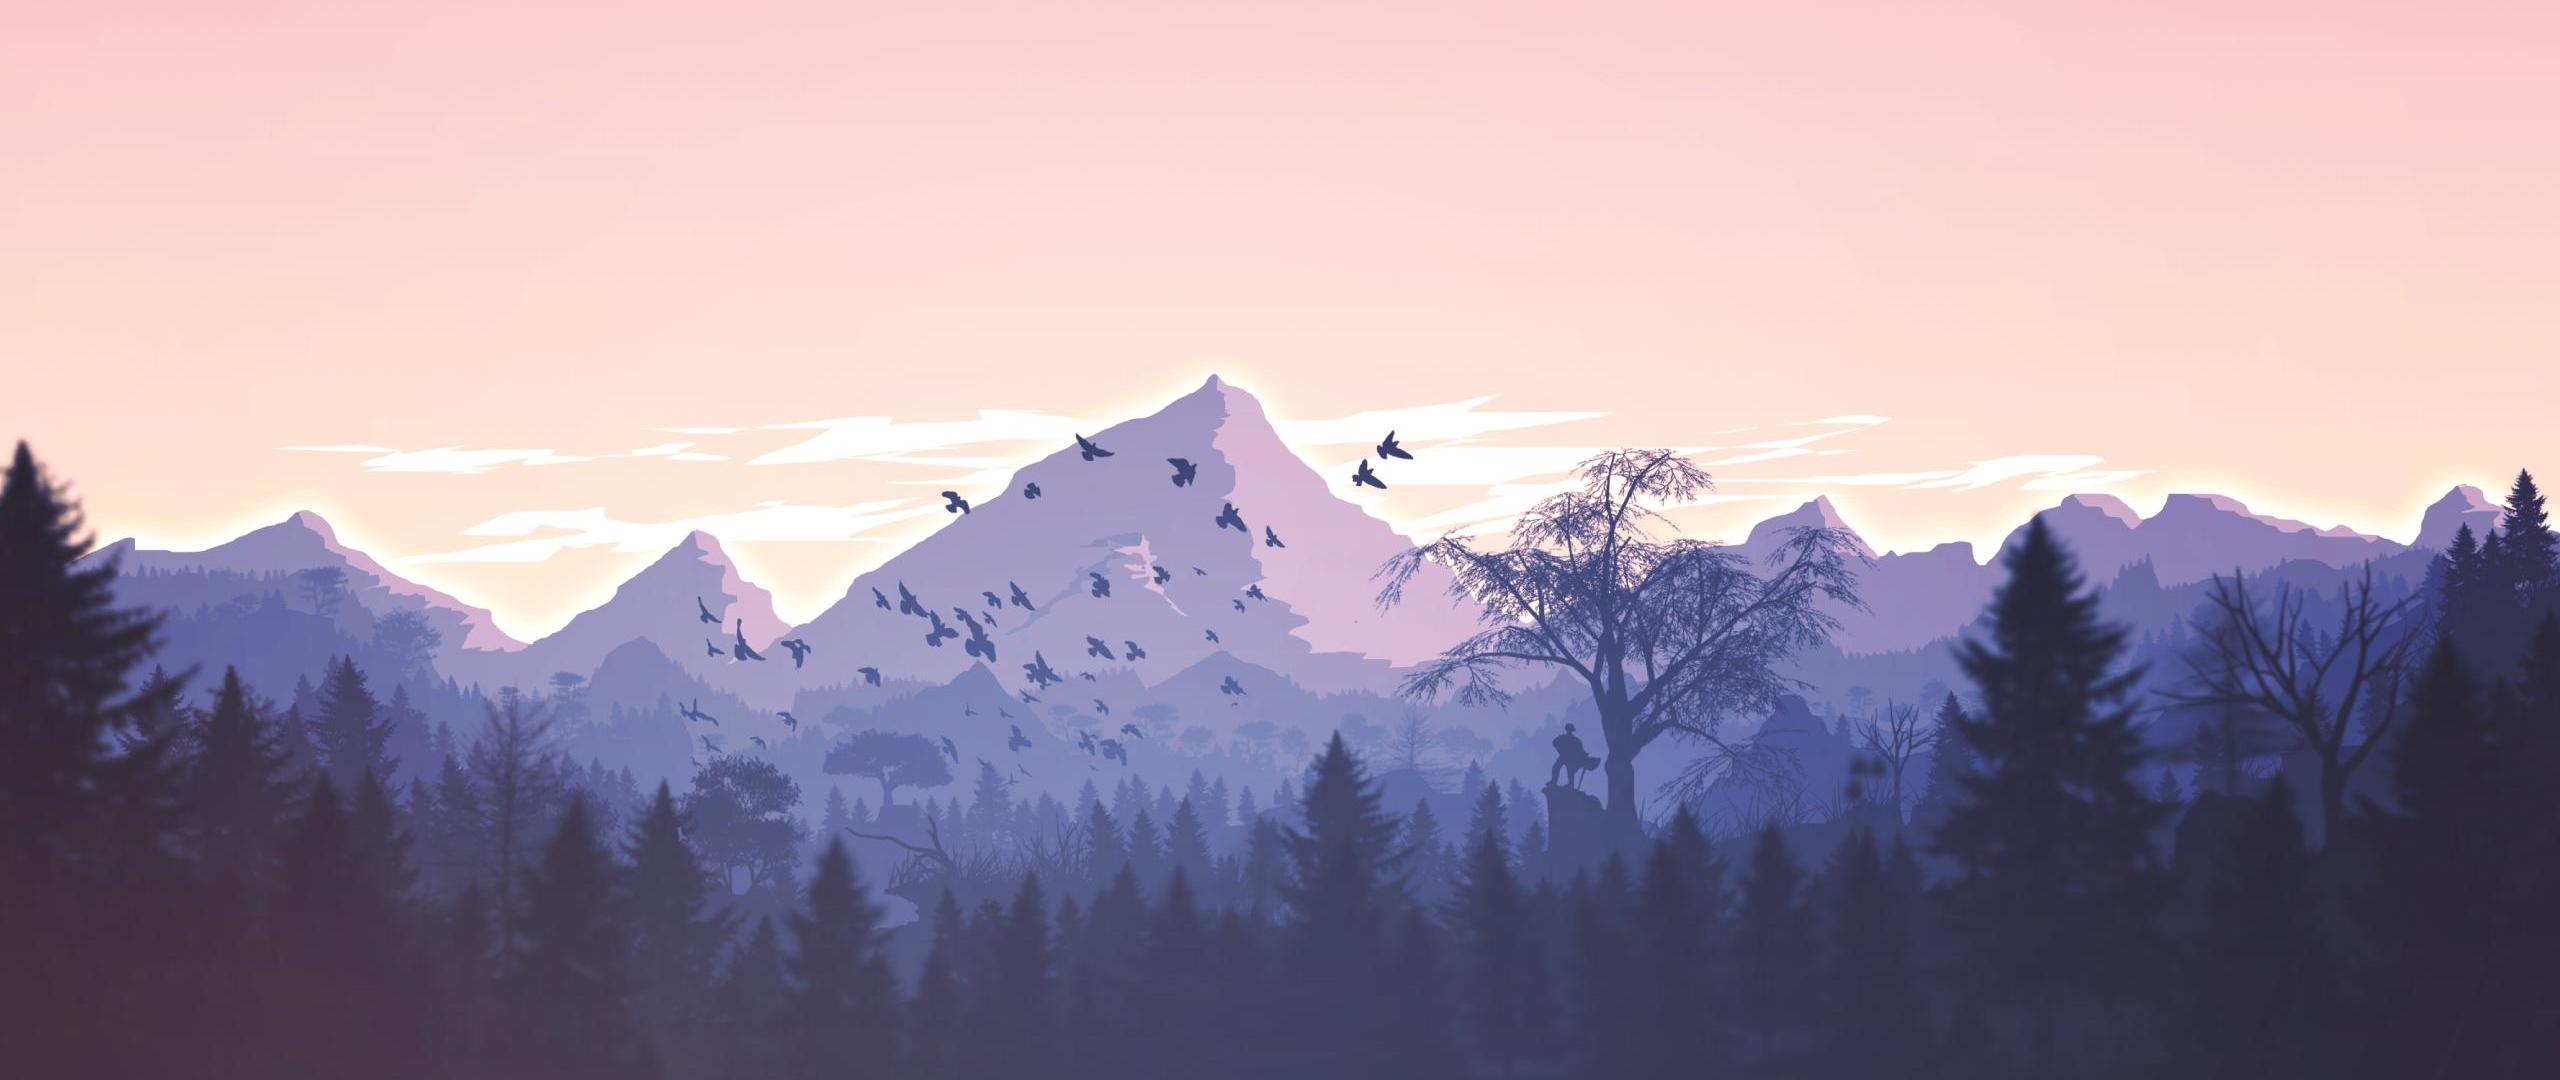 Mystic Mountains, wallpaperreddit.com